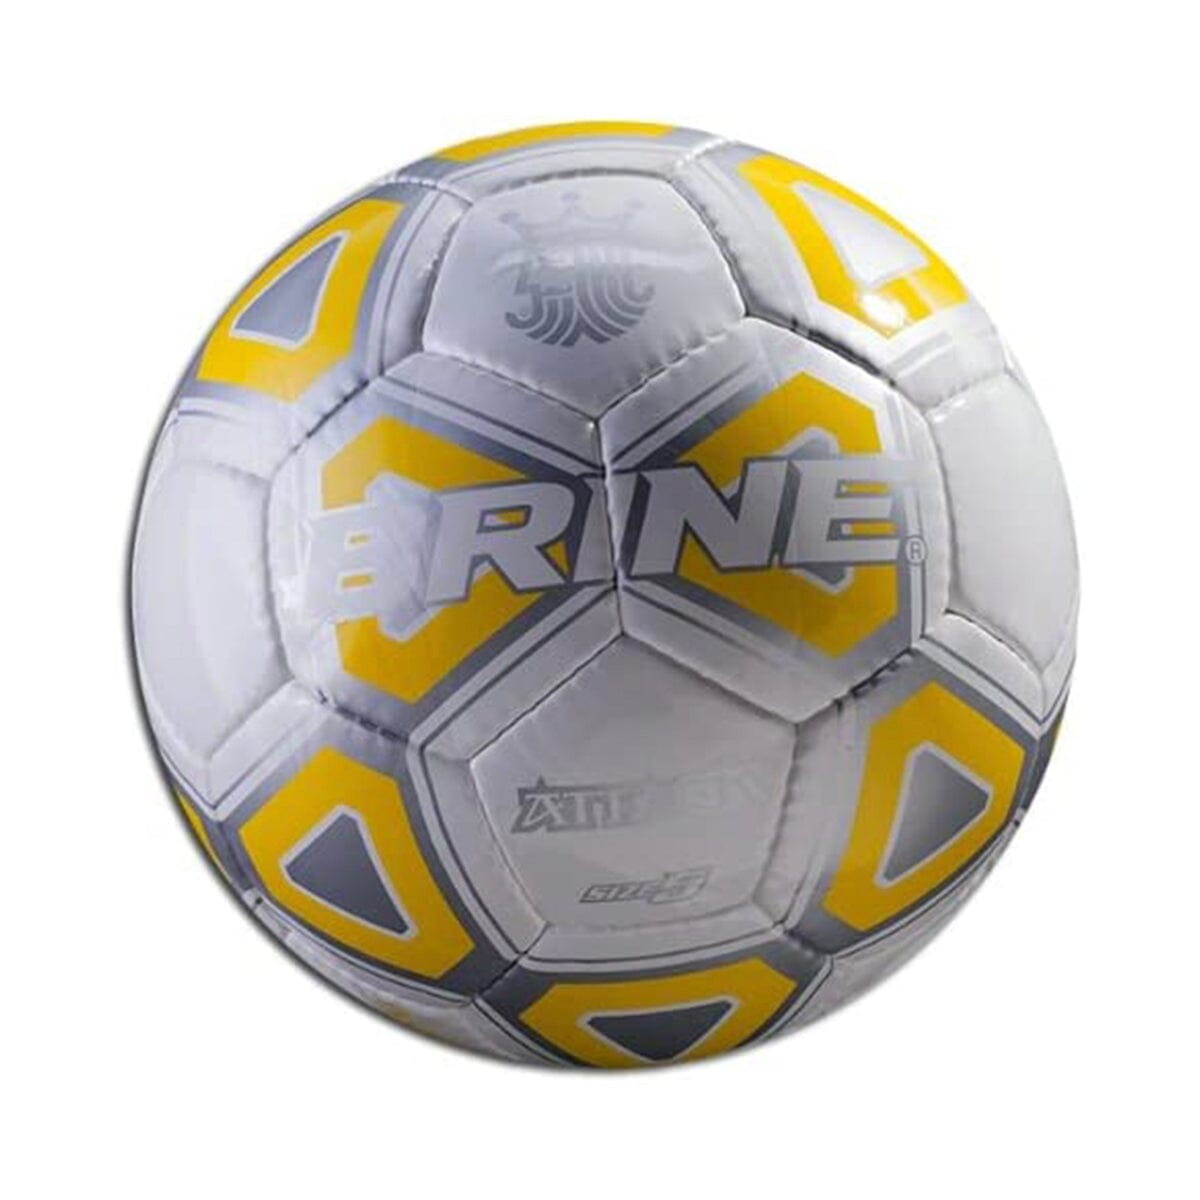 Brine Attack Soccer Ball | SBATTK4 Soccer Balls Adidas 4 Yellow 